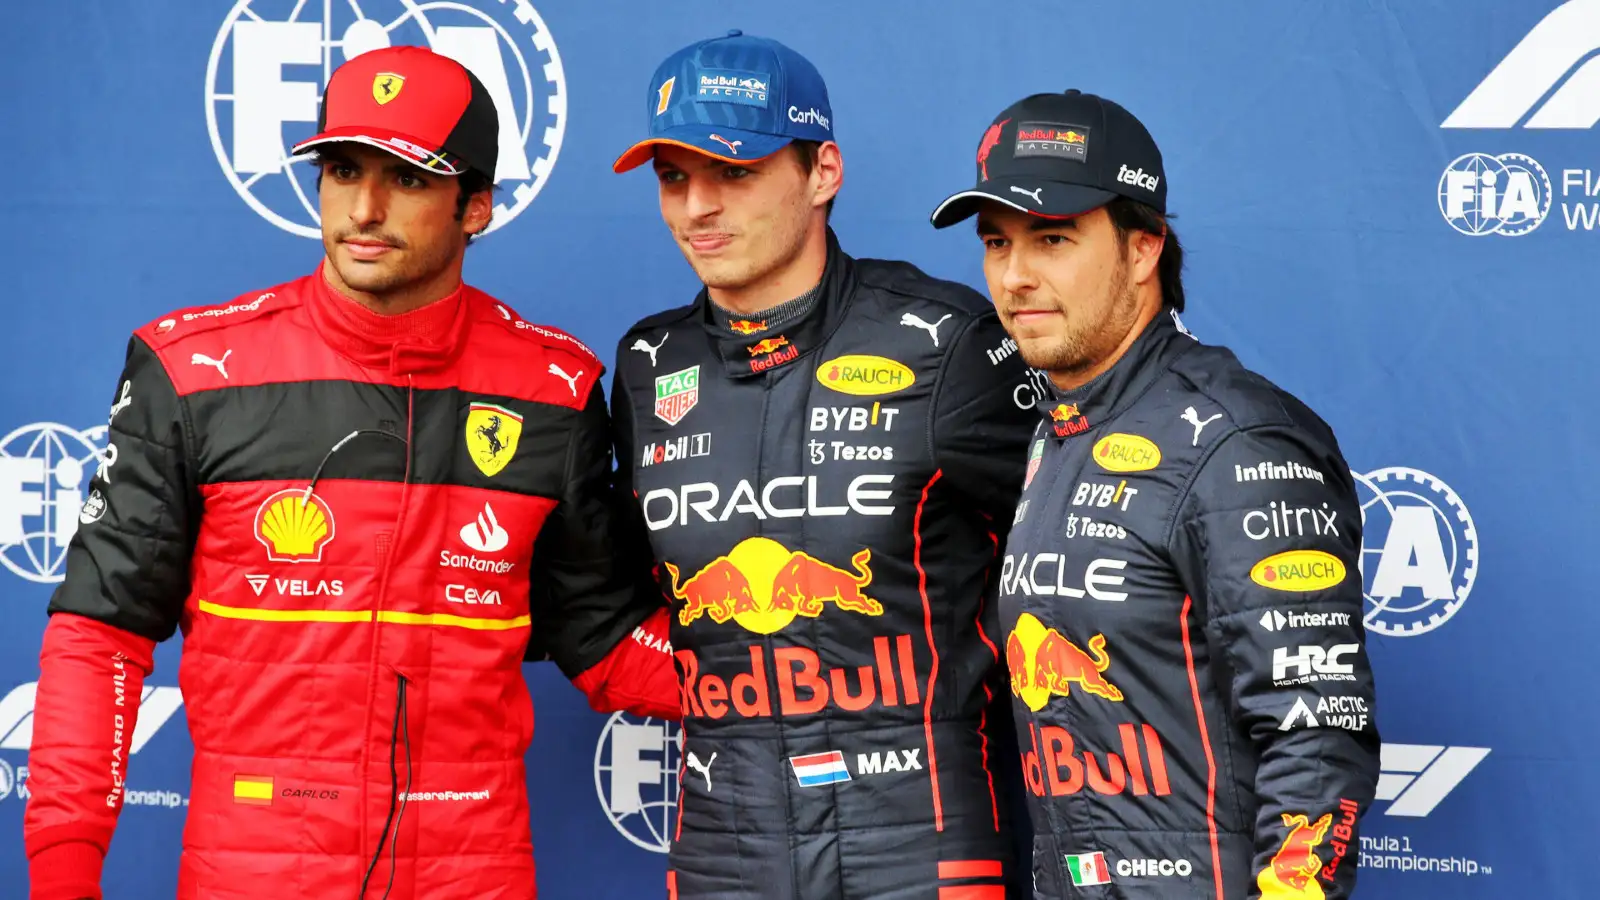 Red Bull's Max Verstappen celebrates pole position alongside Ferrari's Carlos Sainz and Red Bull's Sergio Perez. Spa-Francorchamps, August 2022.